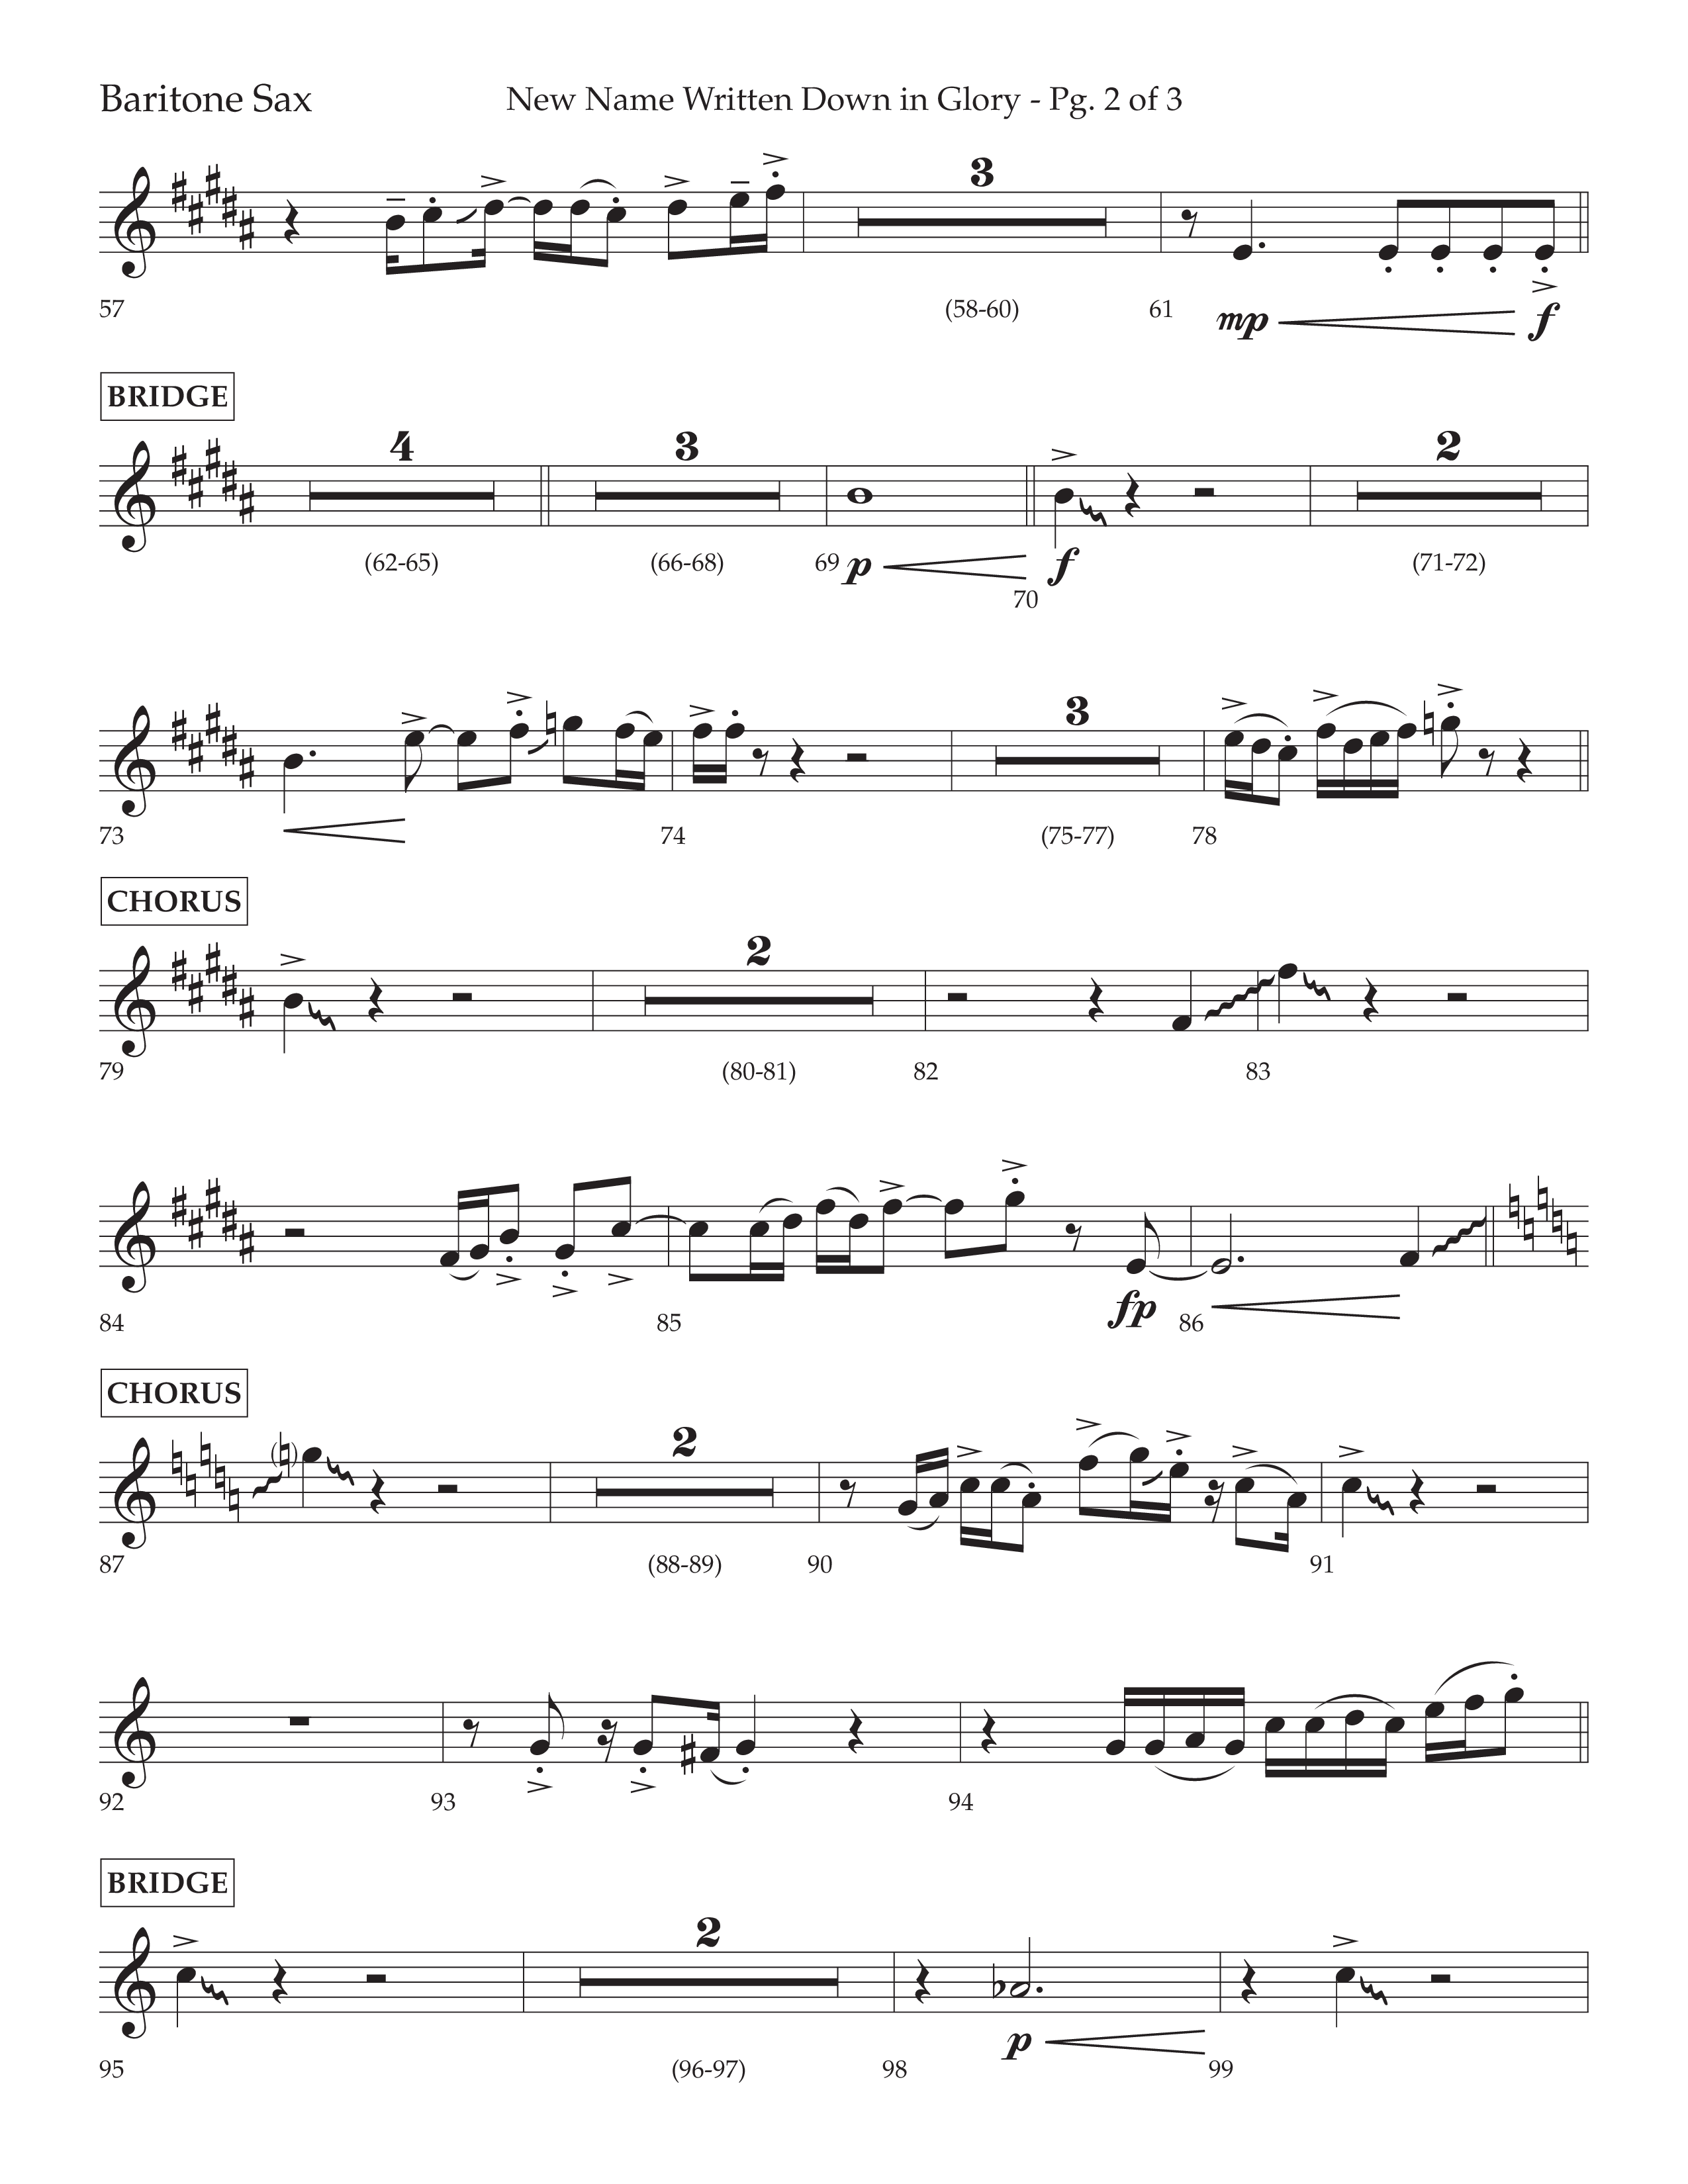 New Name Written Down In Glory (Choral Anthem SATB) Bari Sax (Lifeway Choral / Arr. David Wise / Orch. Bradley Knight)